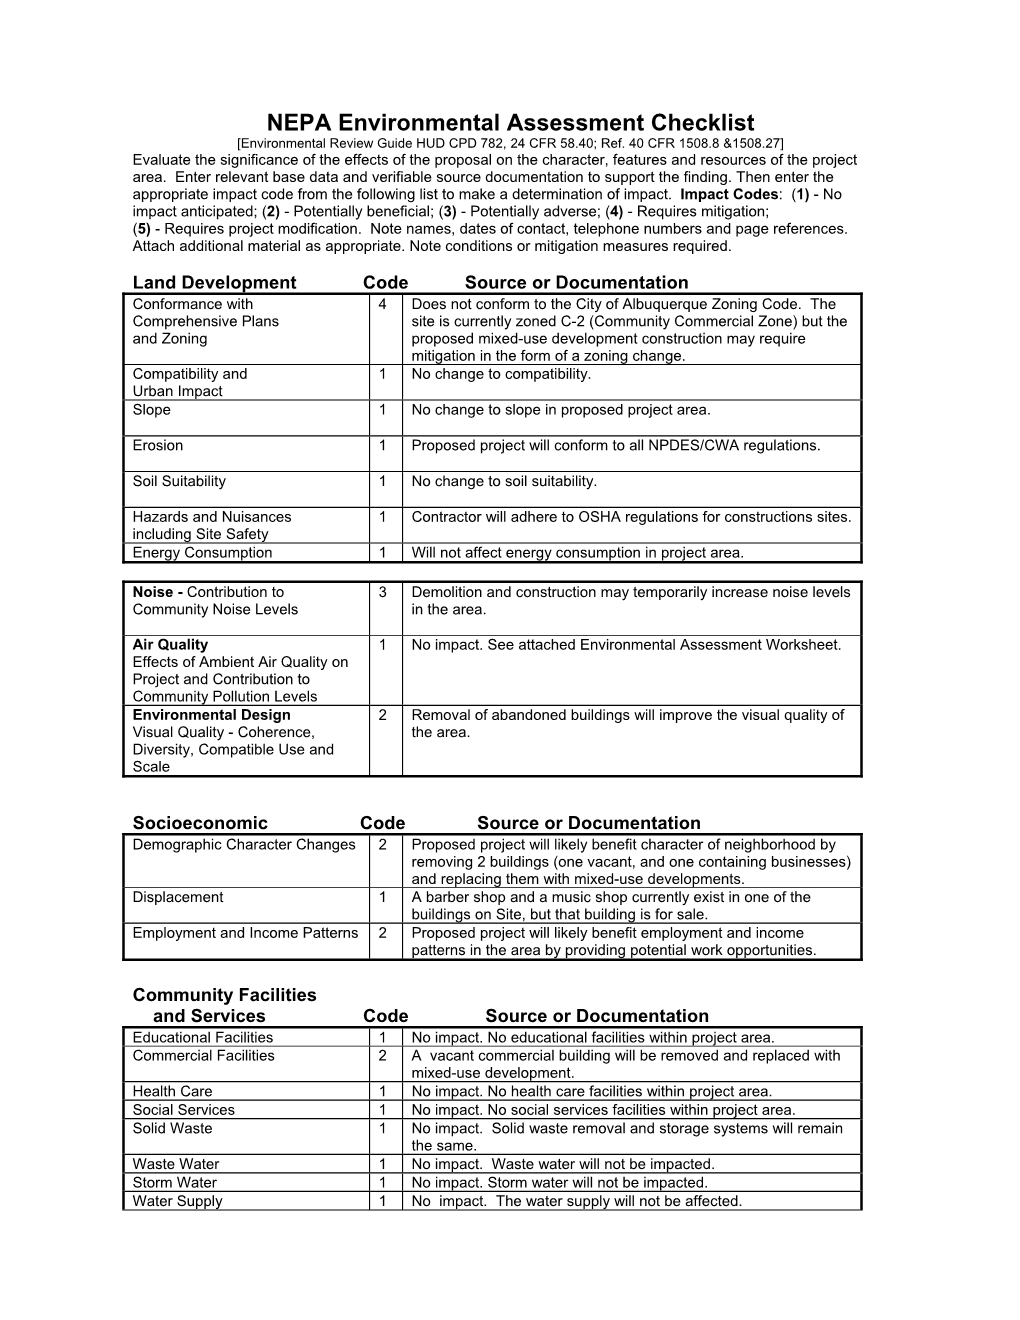 NEPA Environmental Assessment Checklist [Environmental Review Guide HUD CPD 782, 24 CFR 58.40; Ref